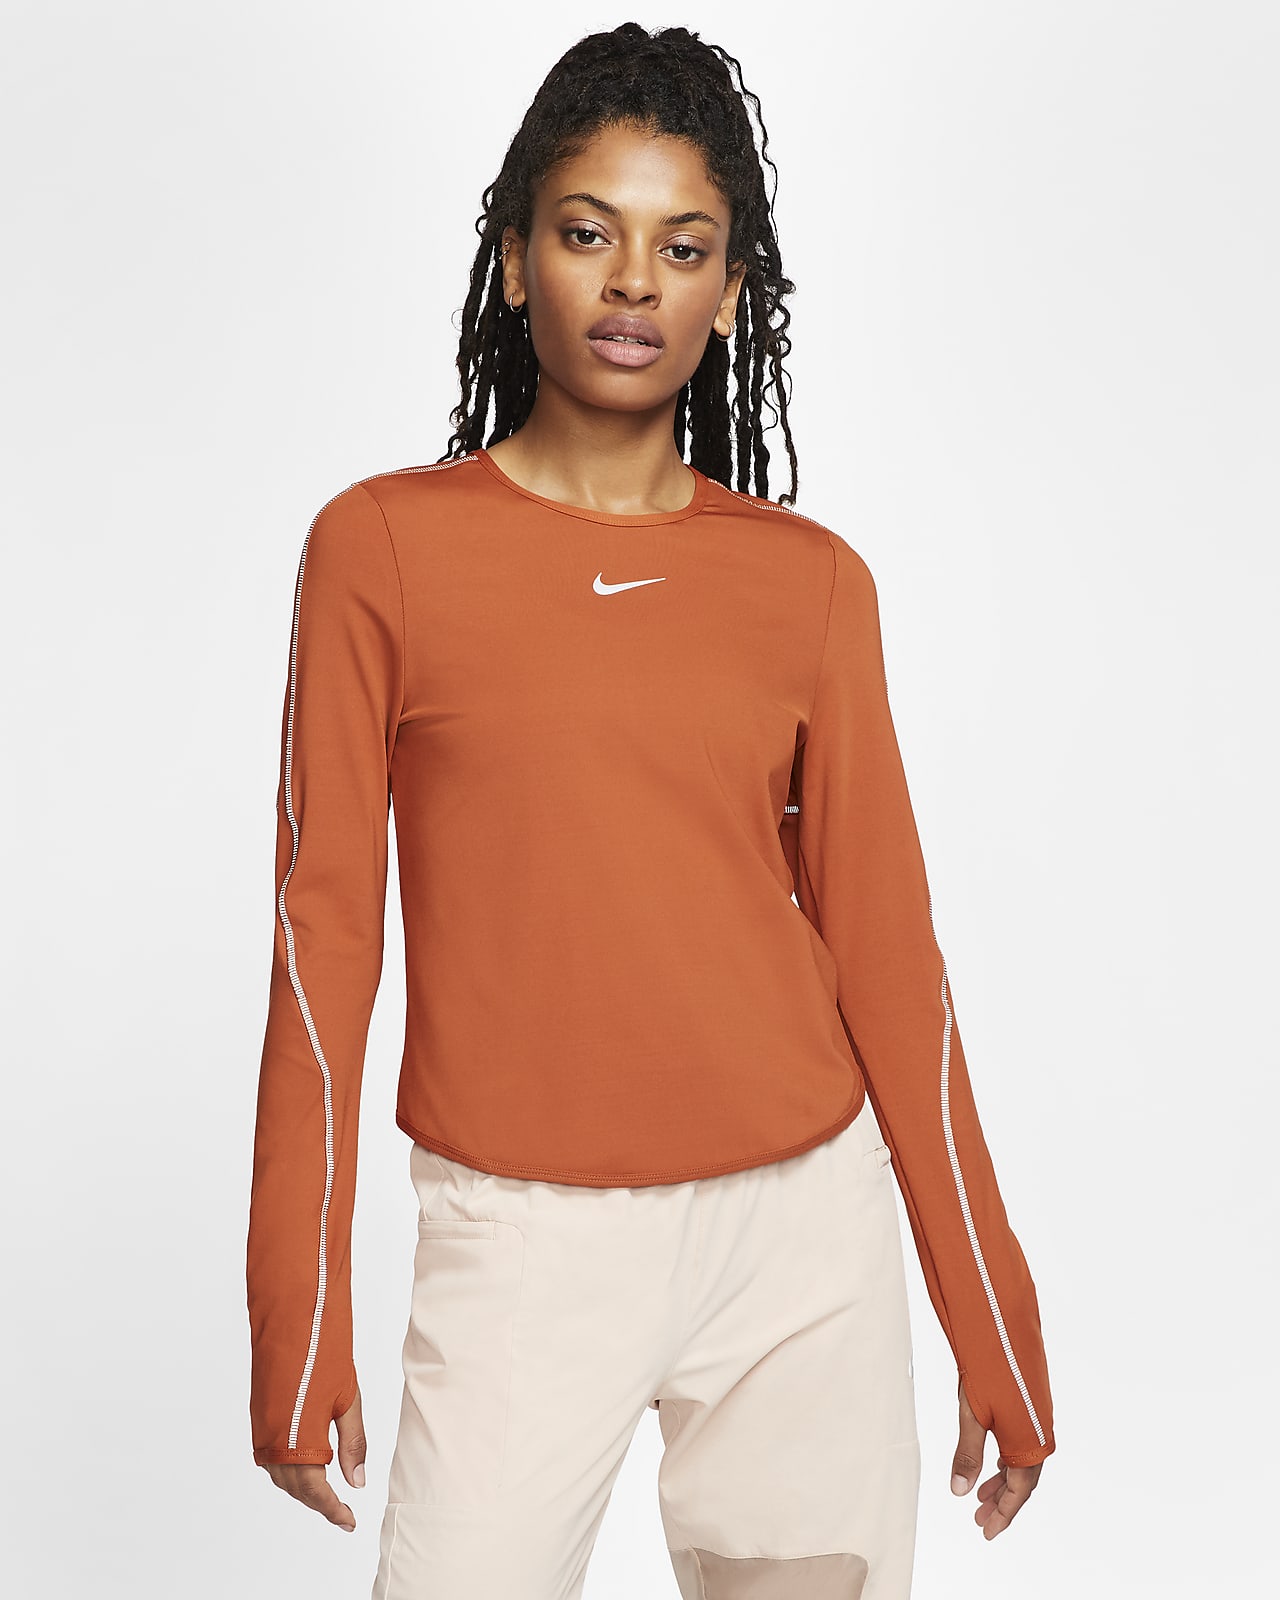 Long-Sleeve Running Top. Nike LU